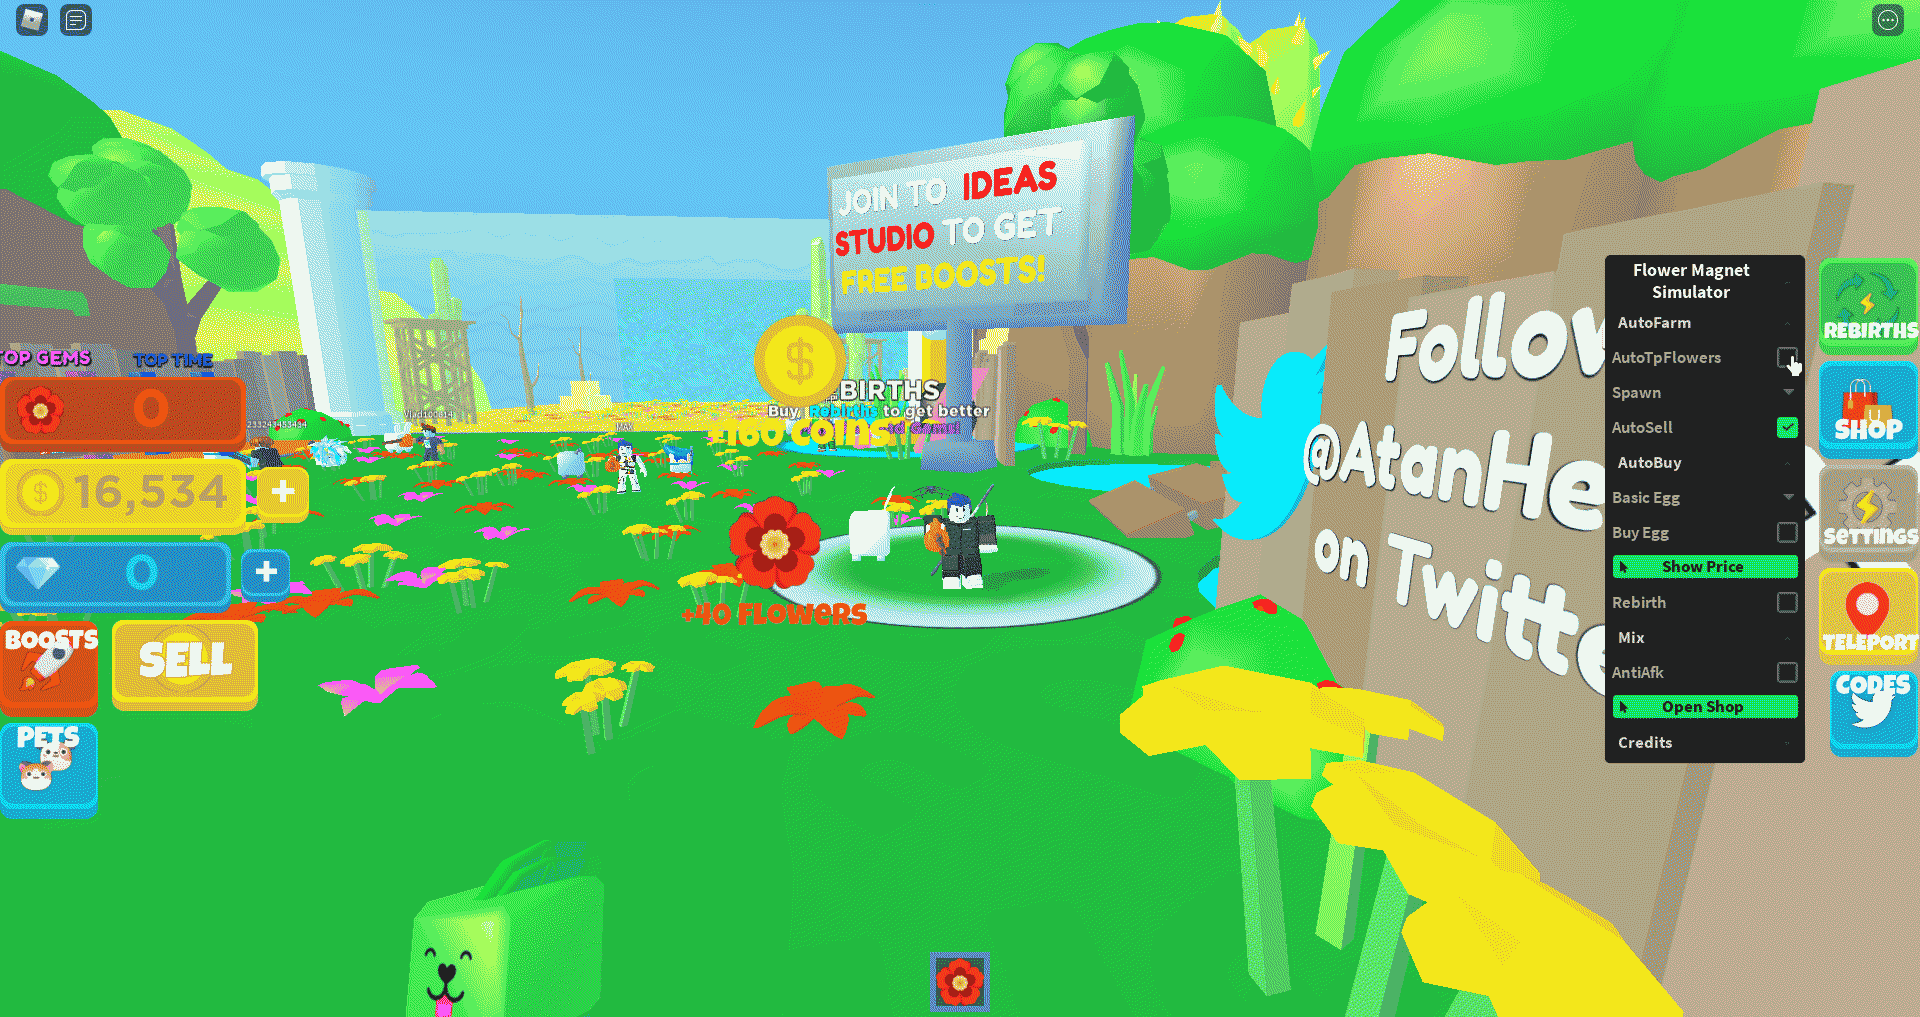 Flower Magnet Simulator NEW GUI!